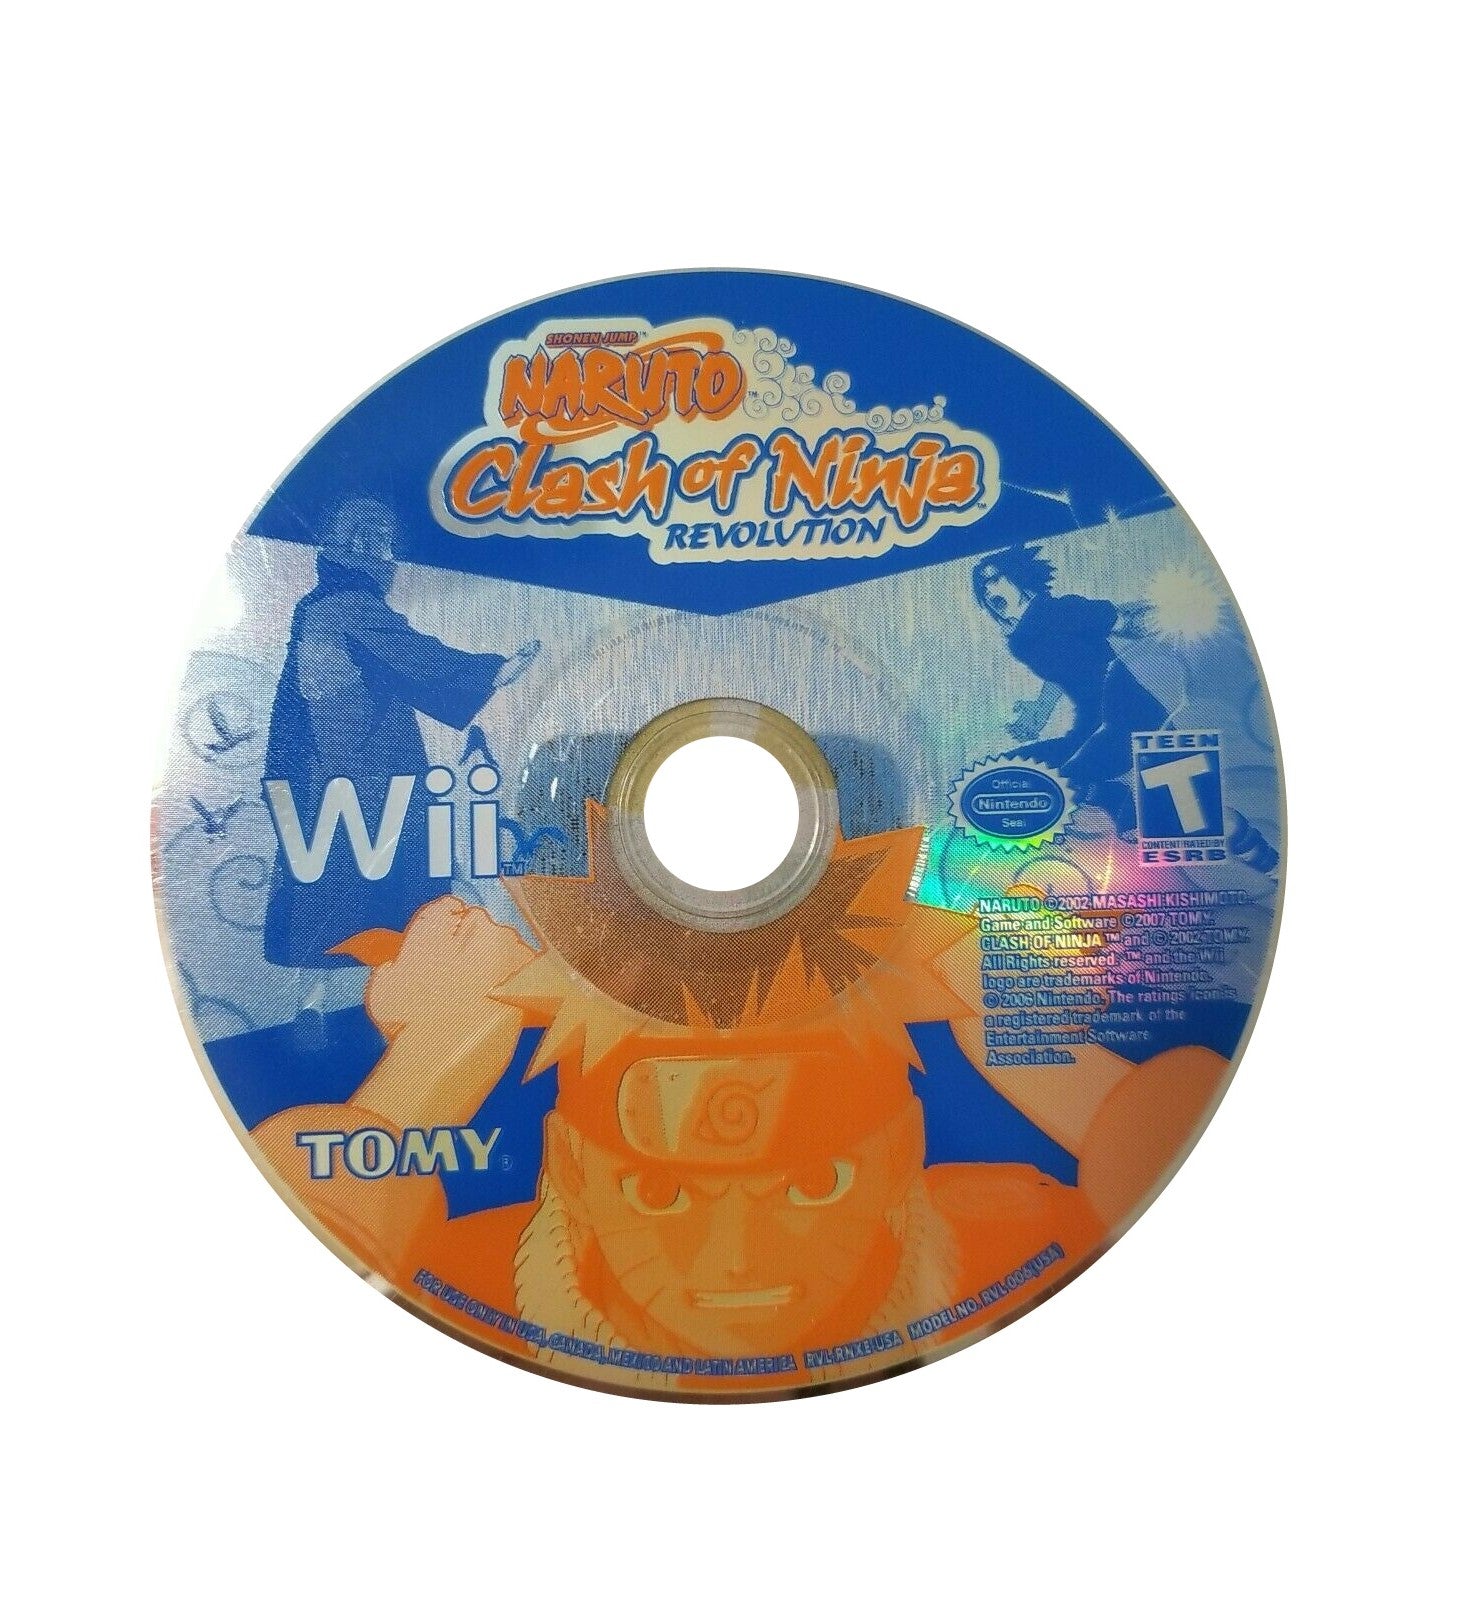 Naruto: Clash of Ninja Revolution - Nintendo Wii Game